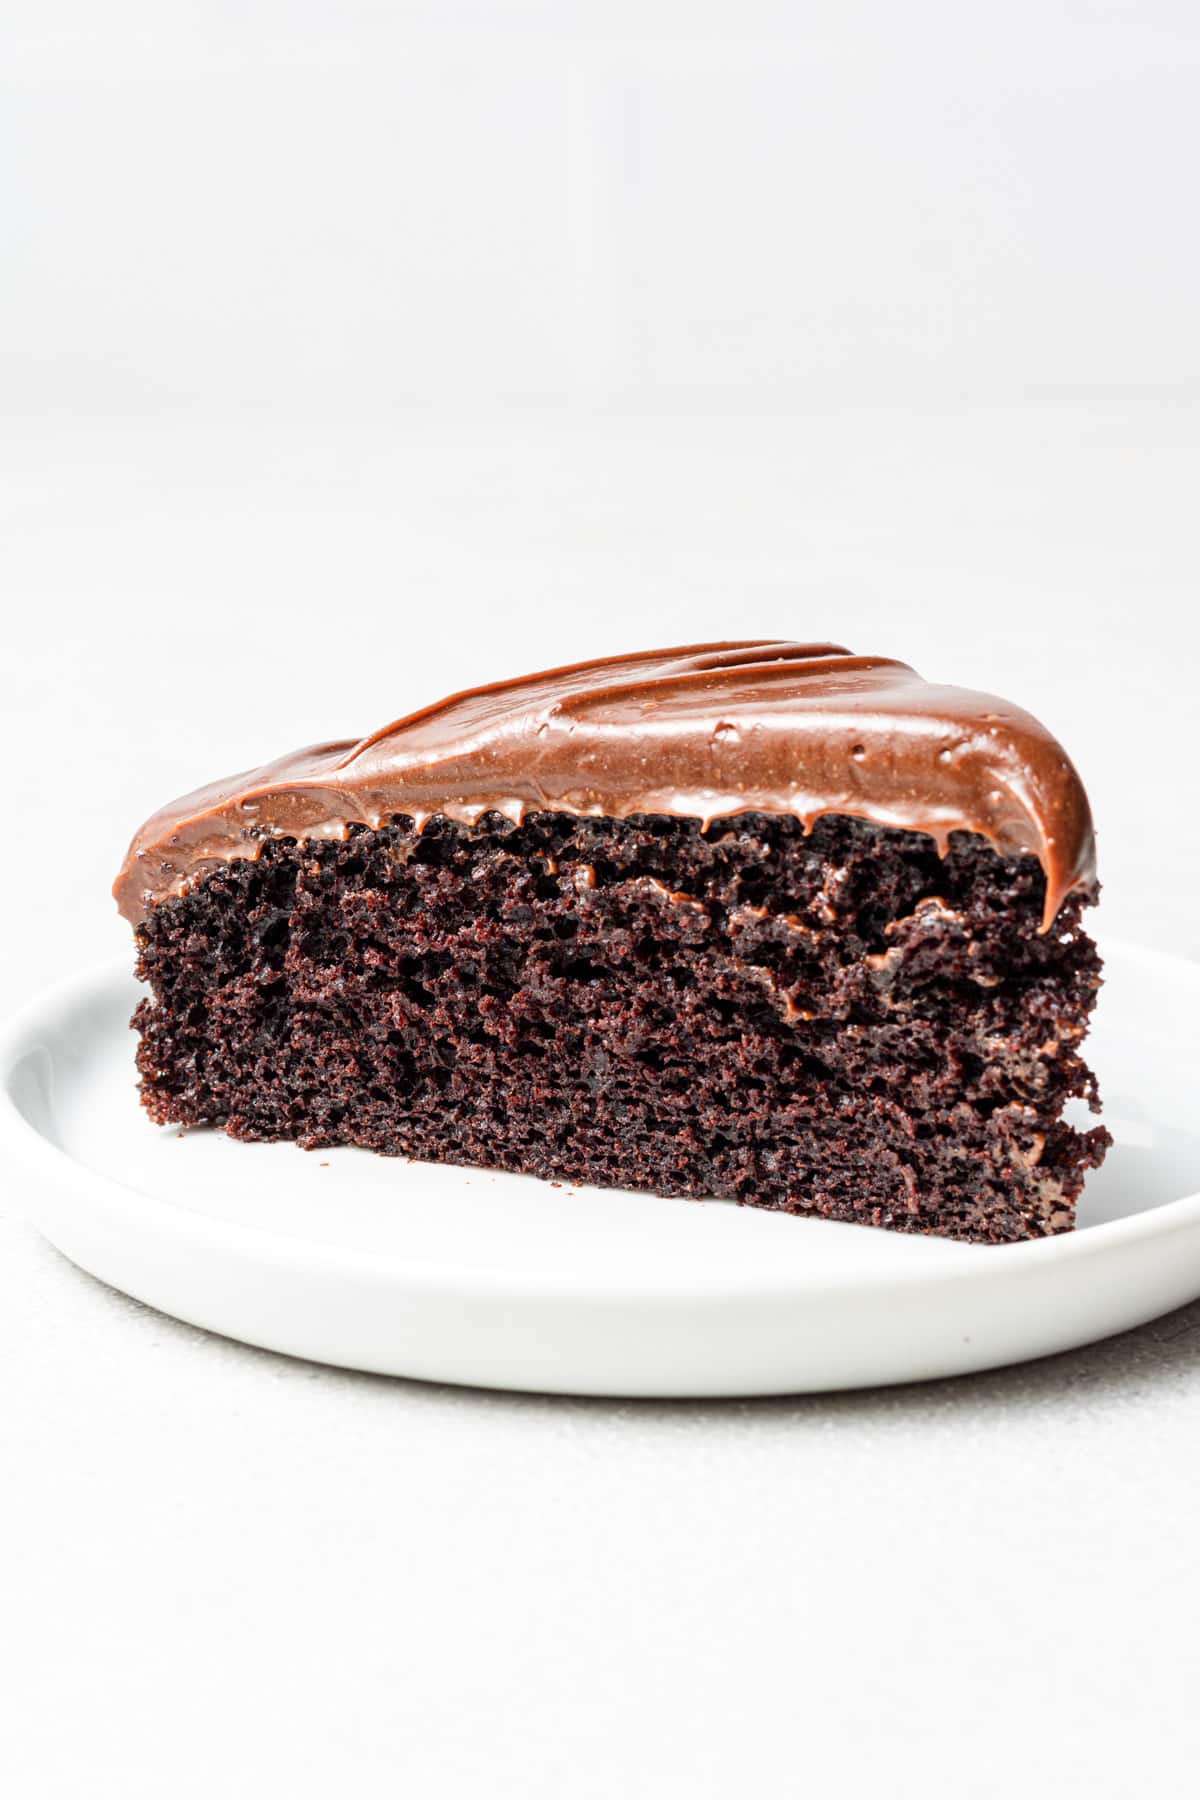 Chocolate fudge cake slice on a white plate